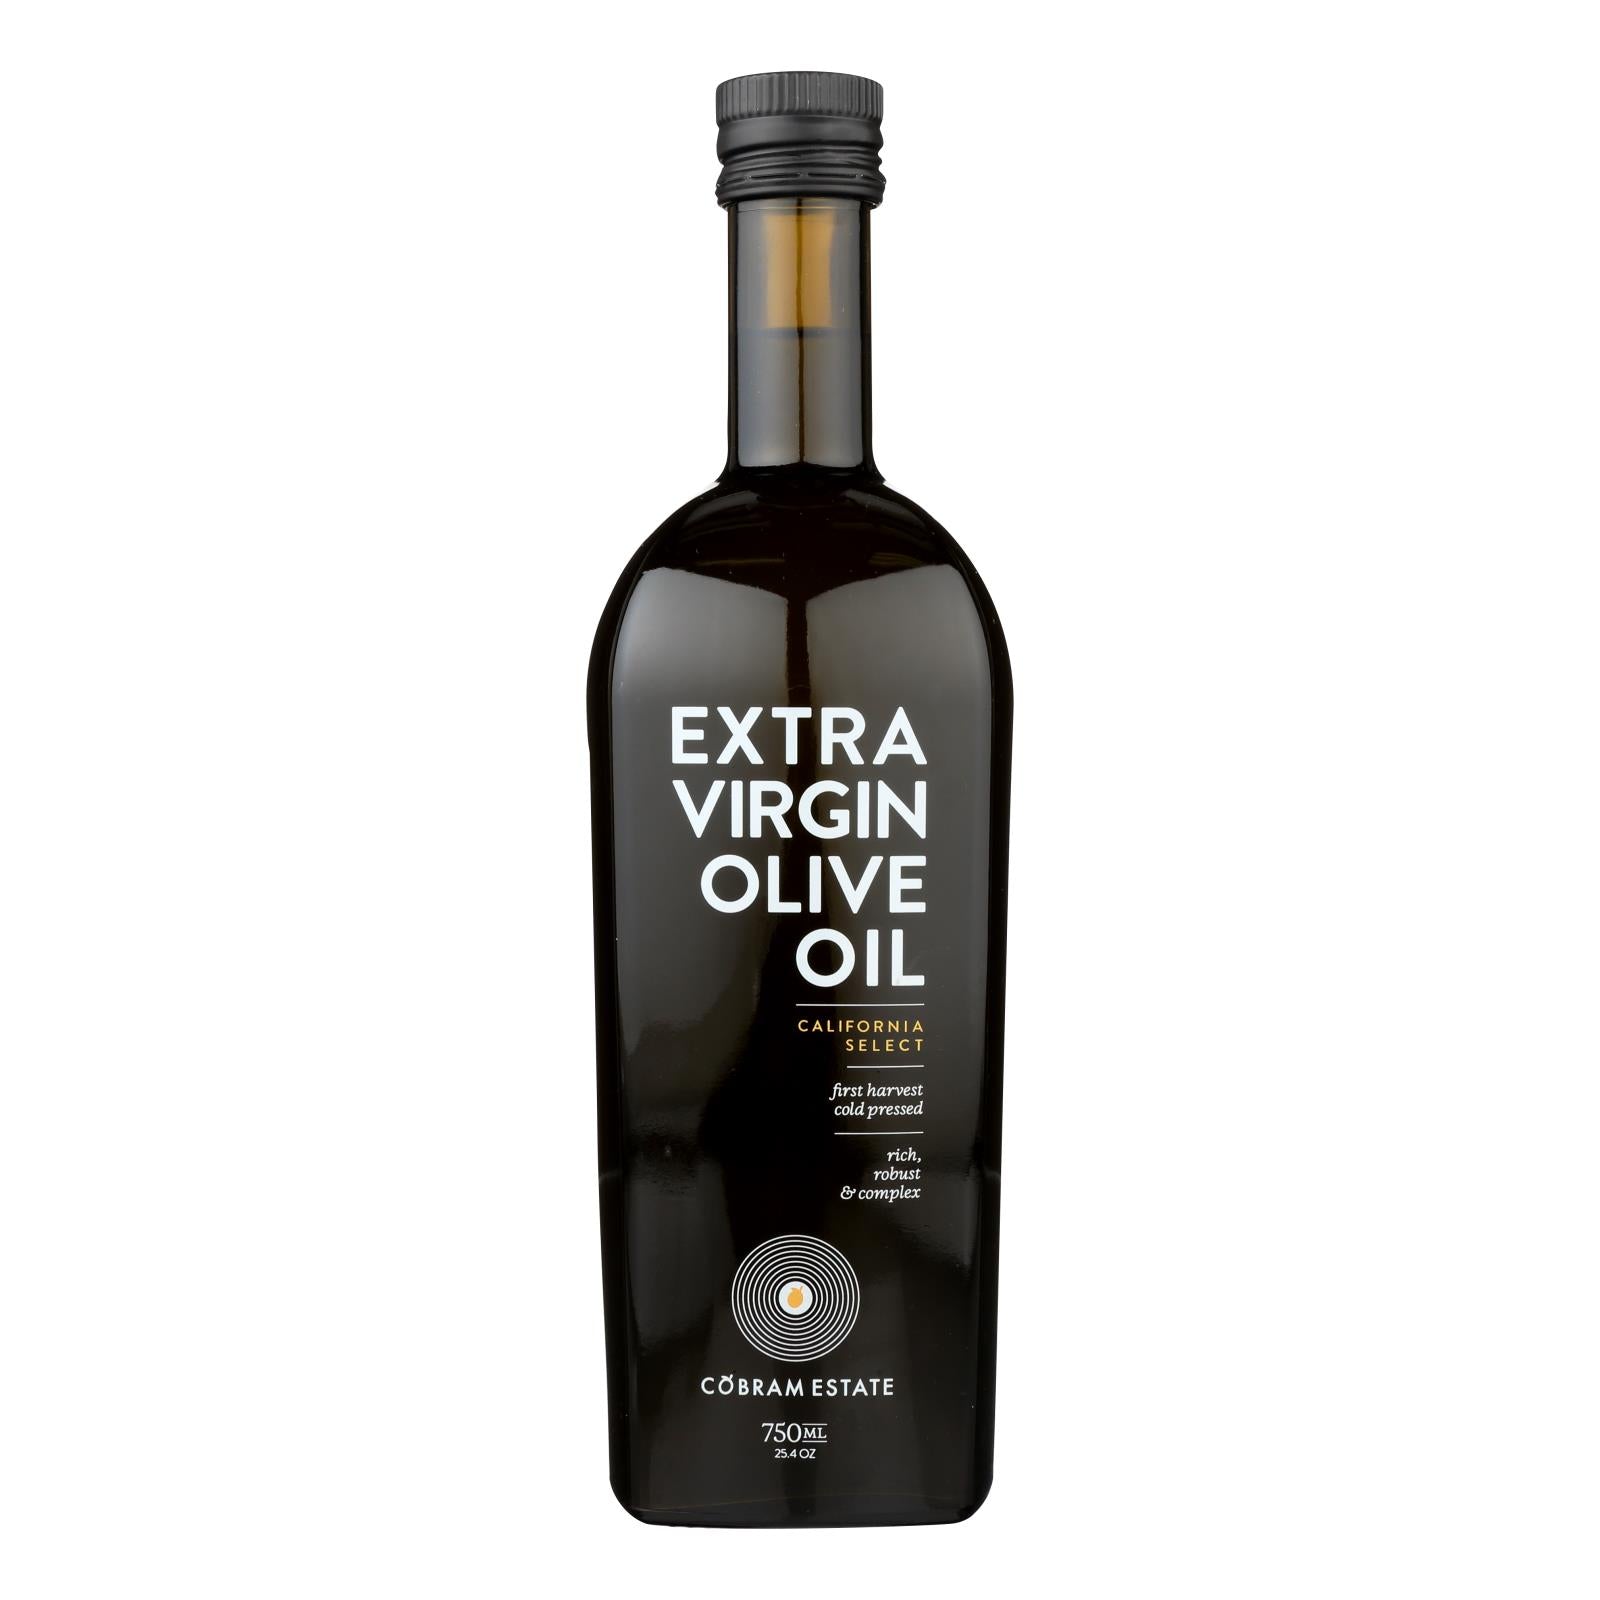 Cobram Estates Extra Virgin Olive Oil - California Select - Case Of 6 - 25.4 Fl Oz.